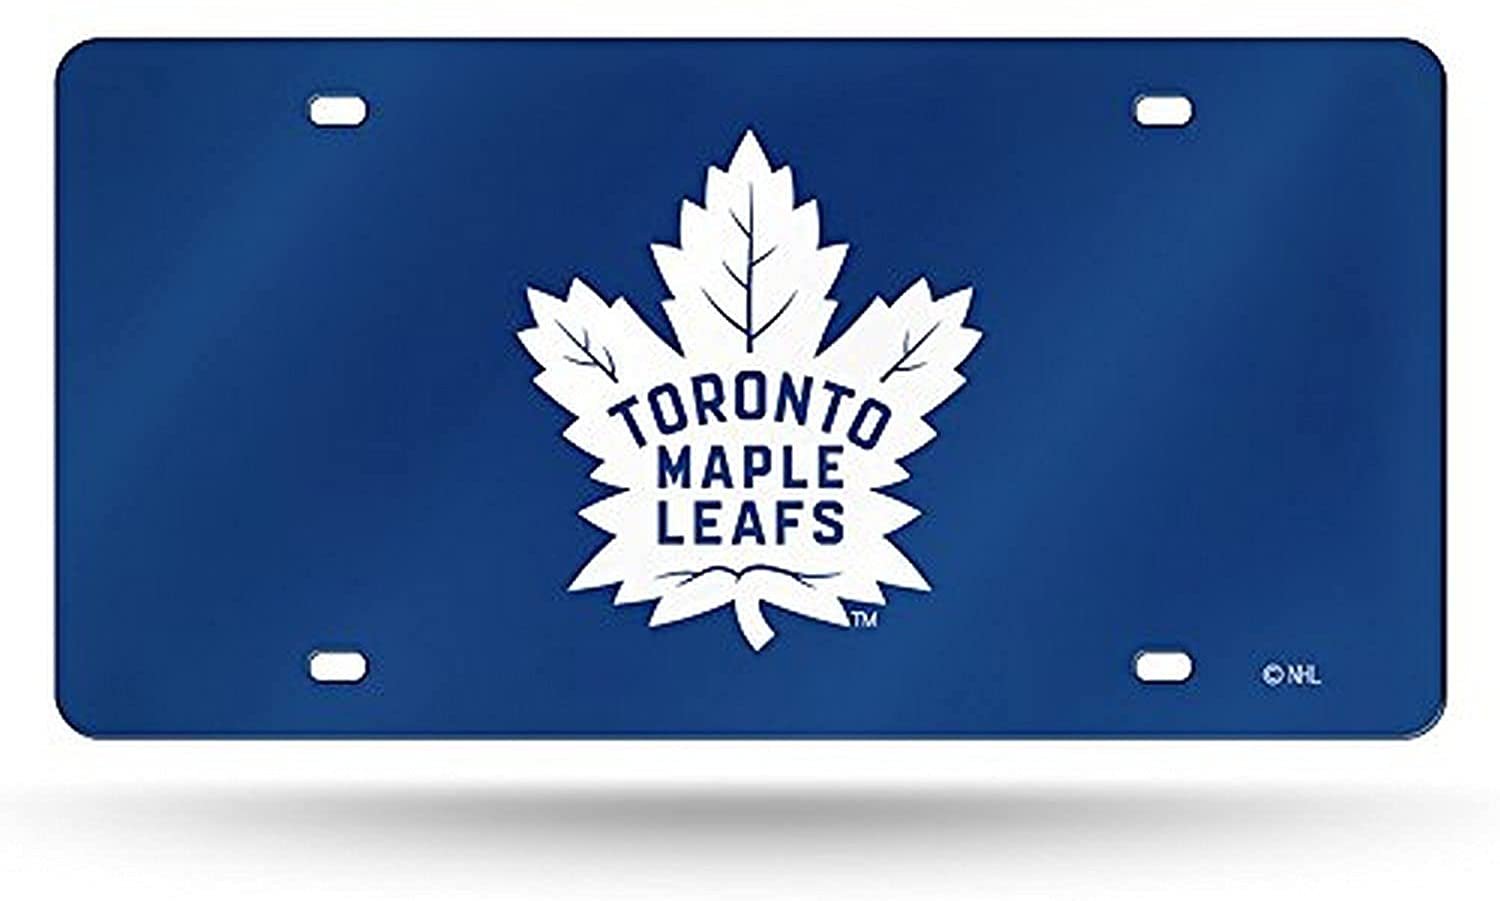 Toronto Maple Leafs Premium Laser Cut Tag License Plate, Blue Mirrored Acrylic Inlaid, 12x6 Inch